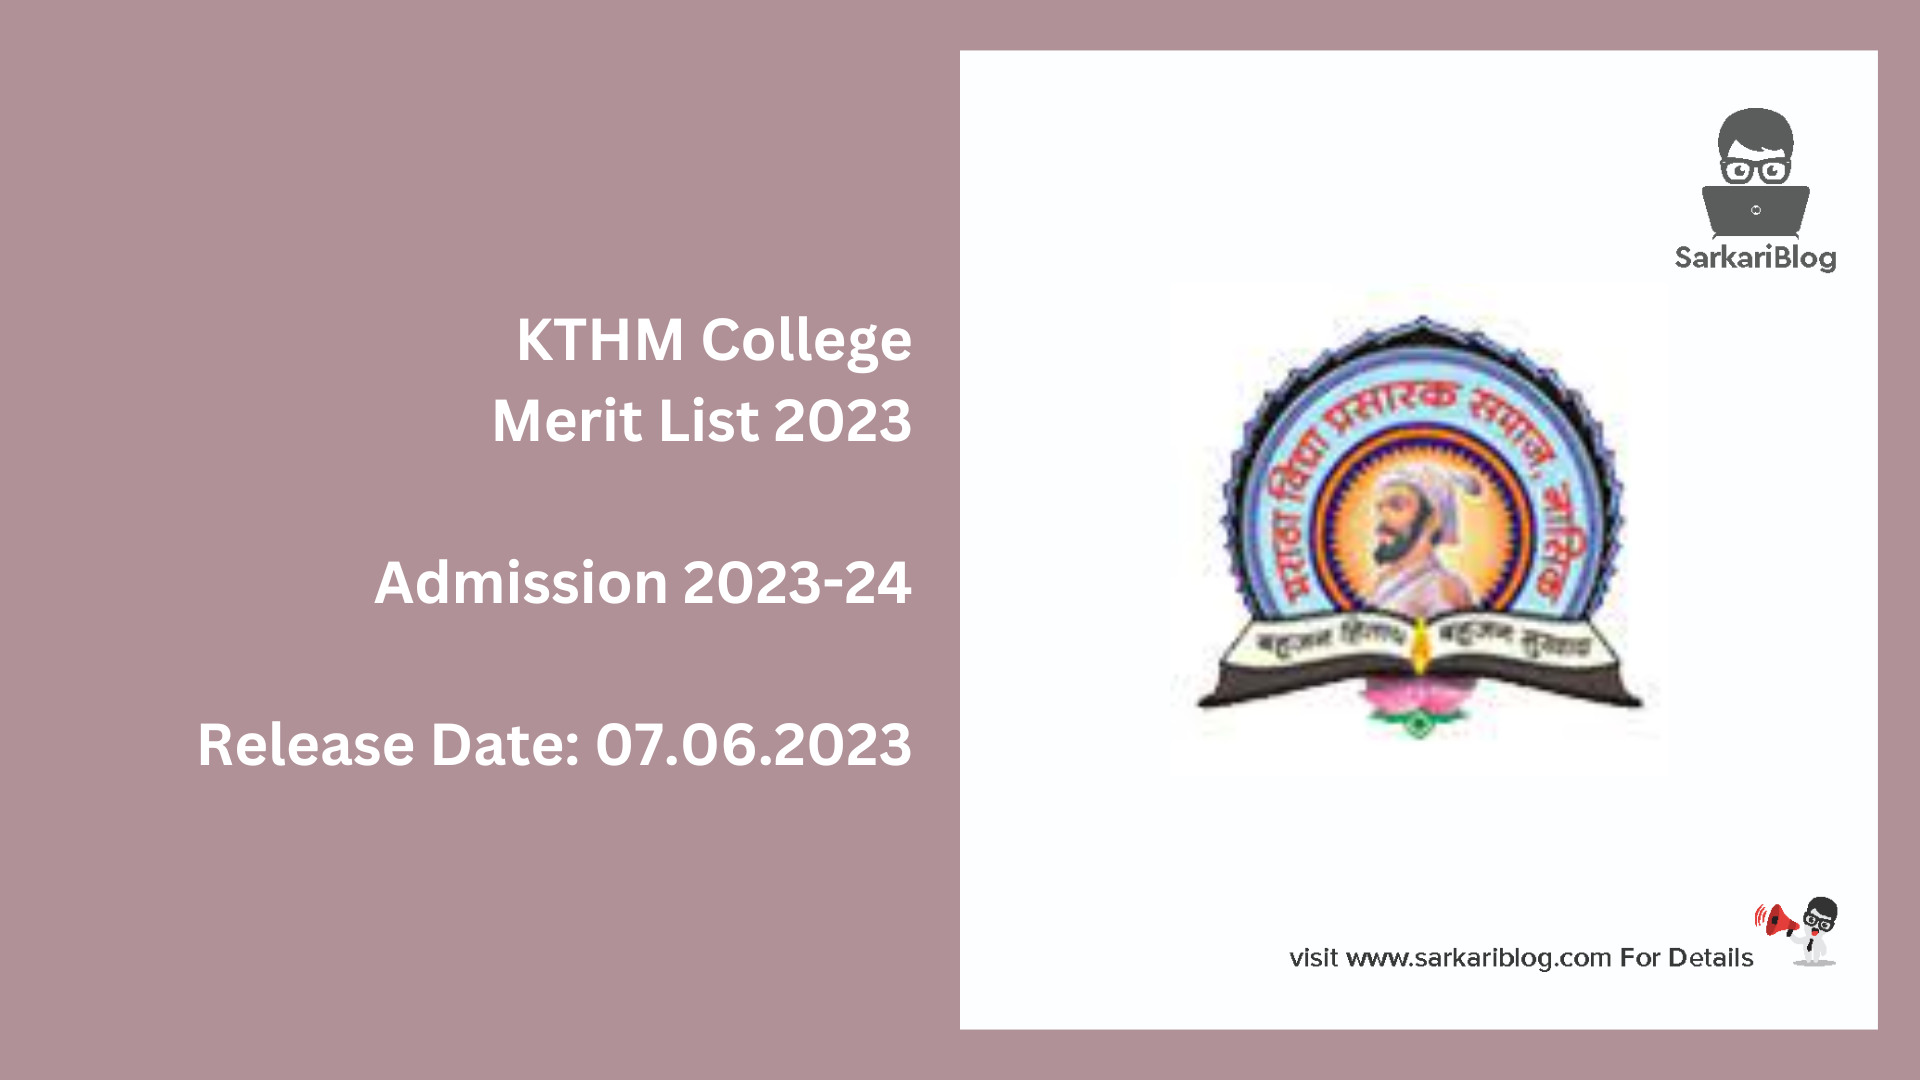 KTHM College Merit List 2023